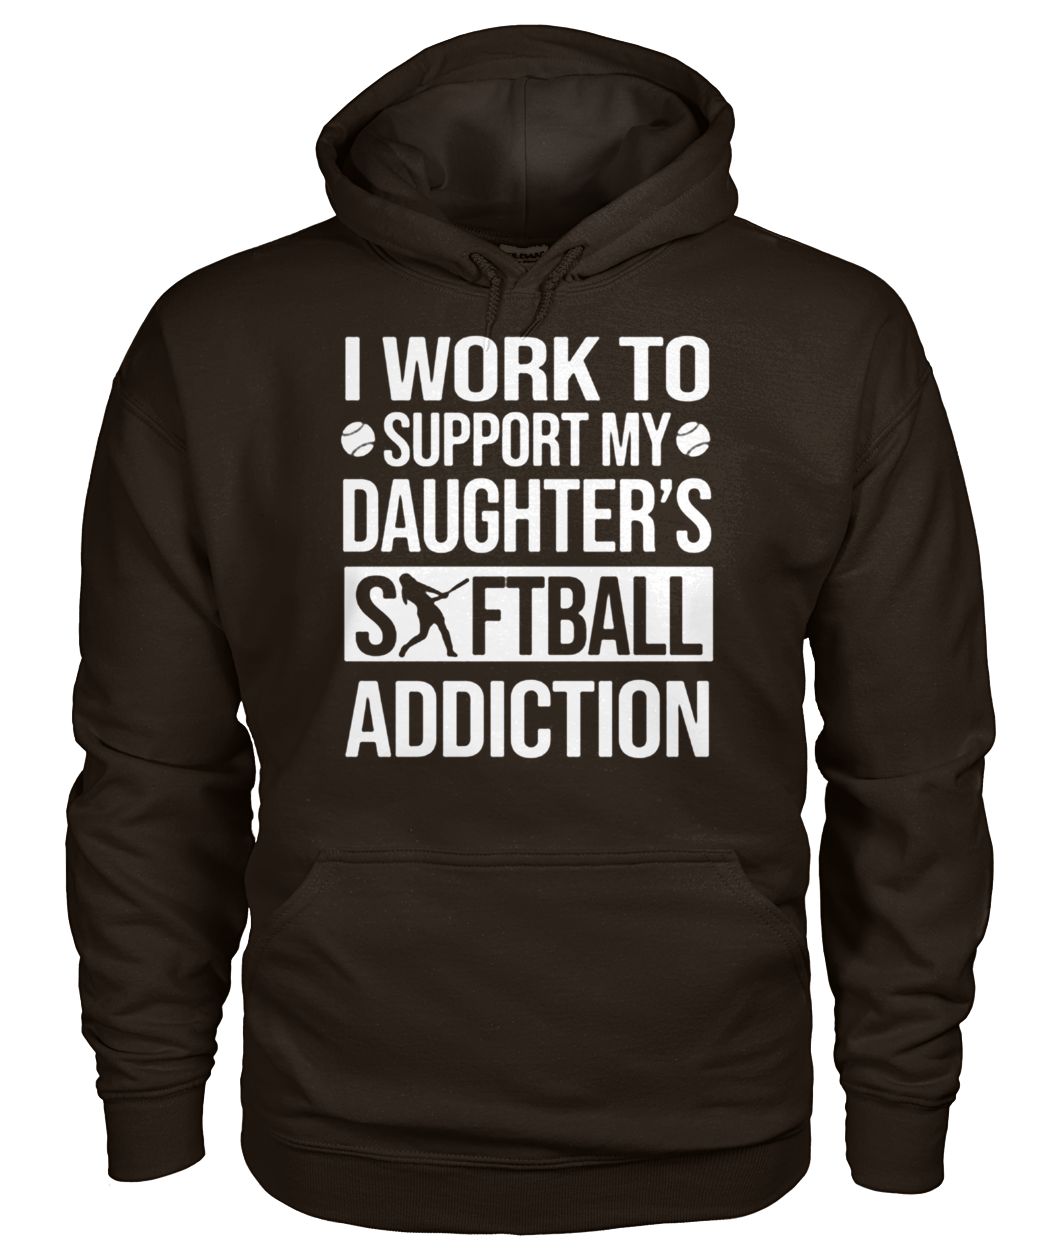 I work to support my daughter's softball addiction gildan hoodie